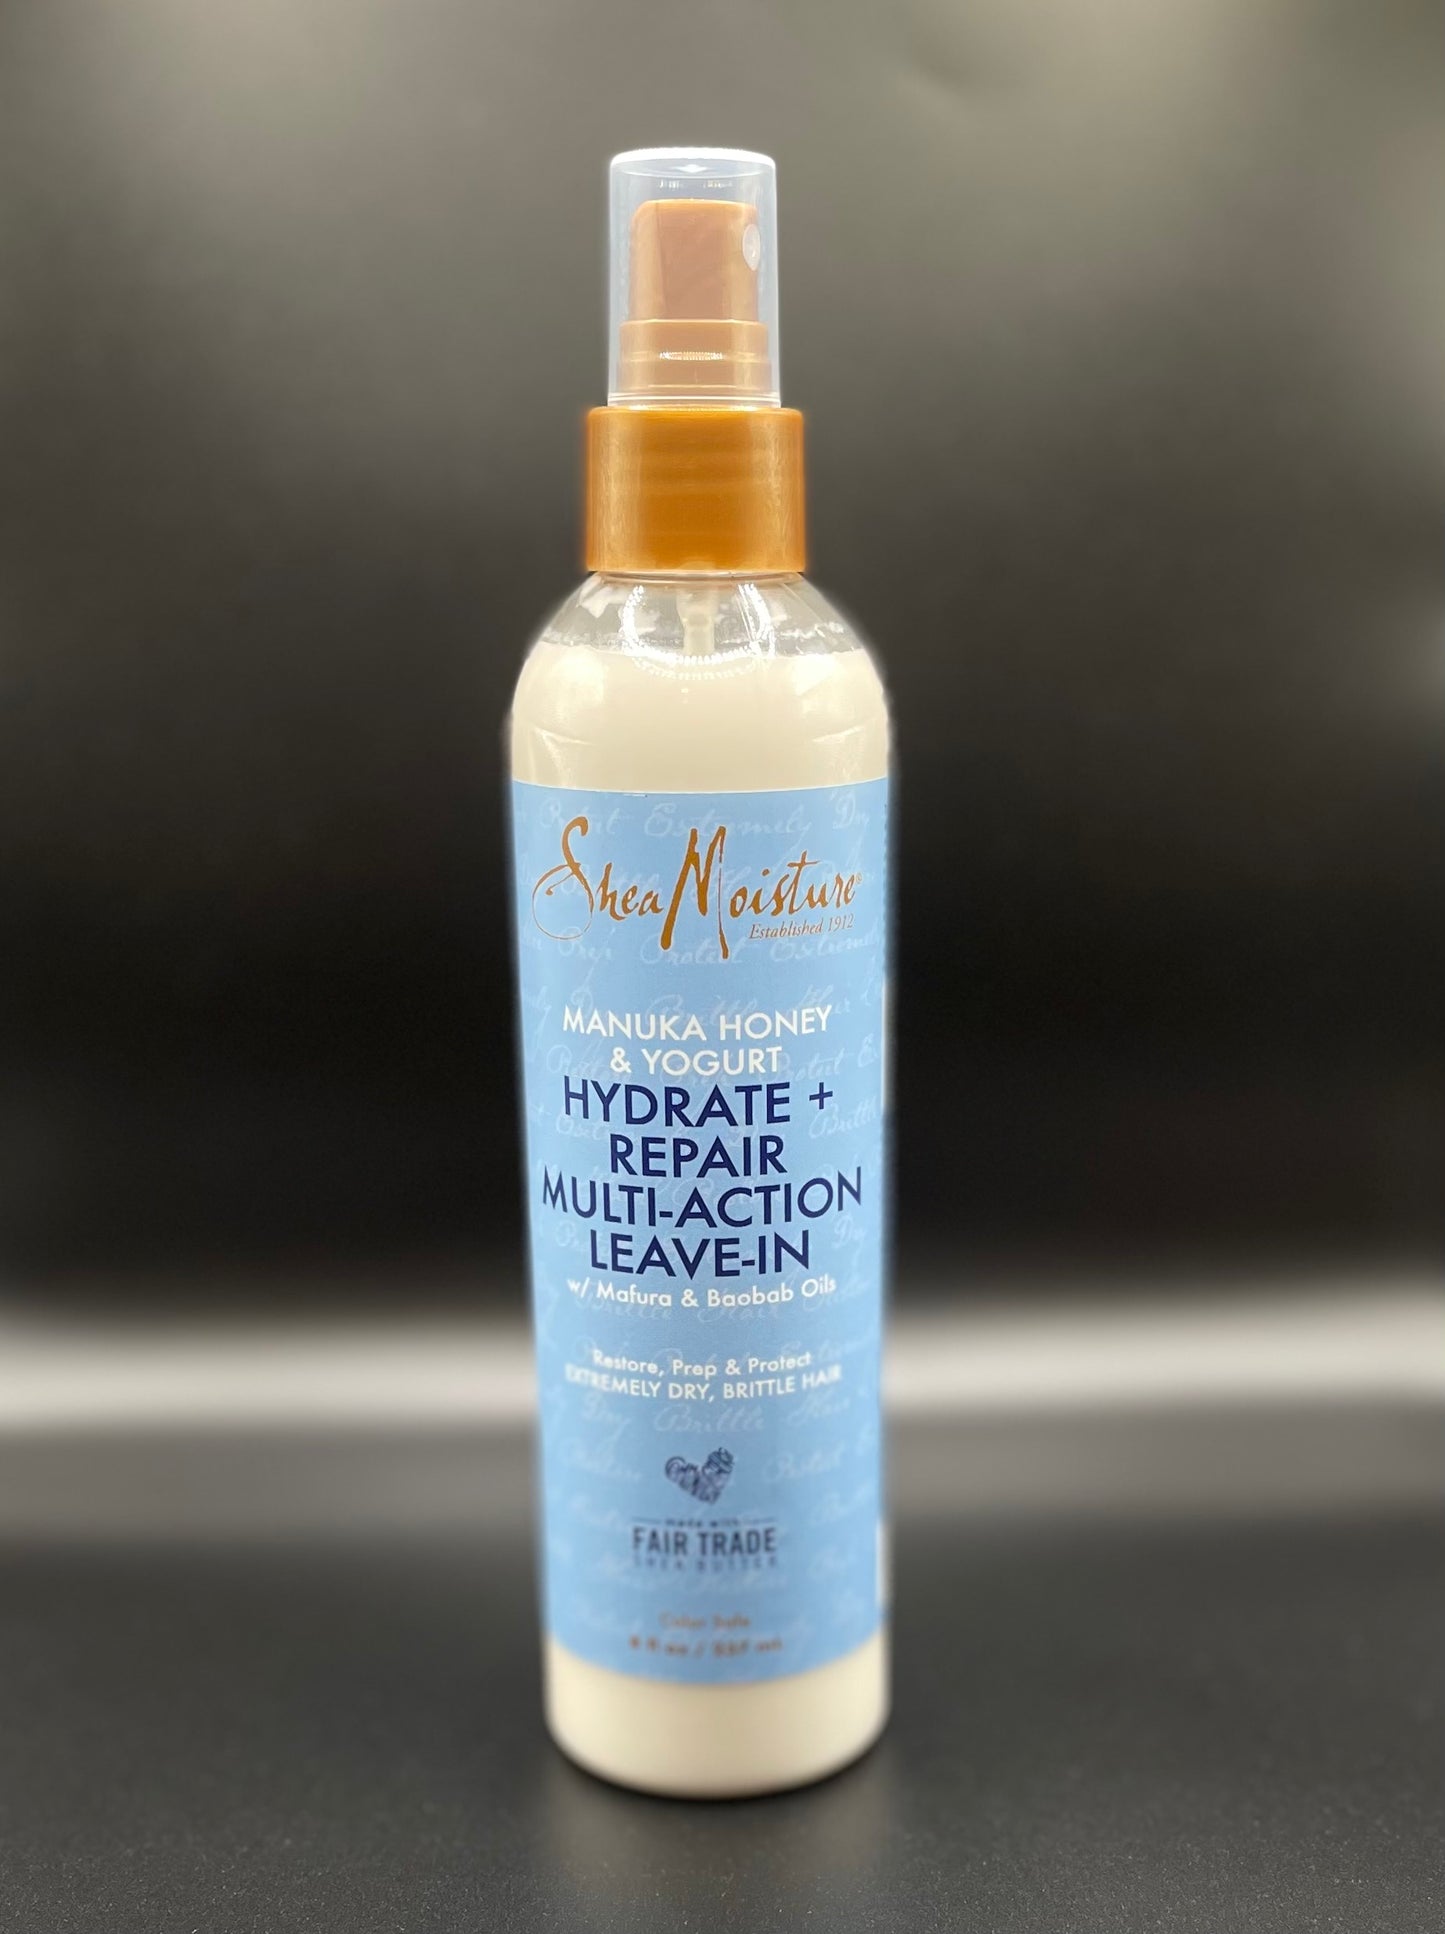 Shea Moisture-Manuka Honey & Yogurt Hydrate + Repair Multi-Action Leave-In